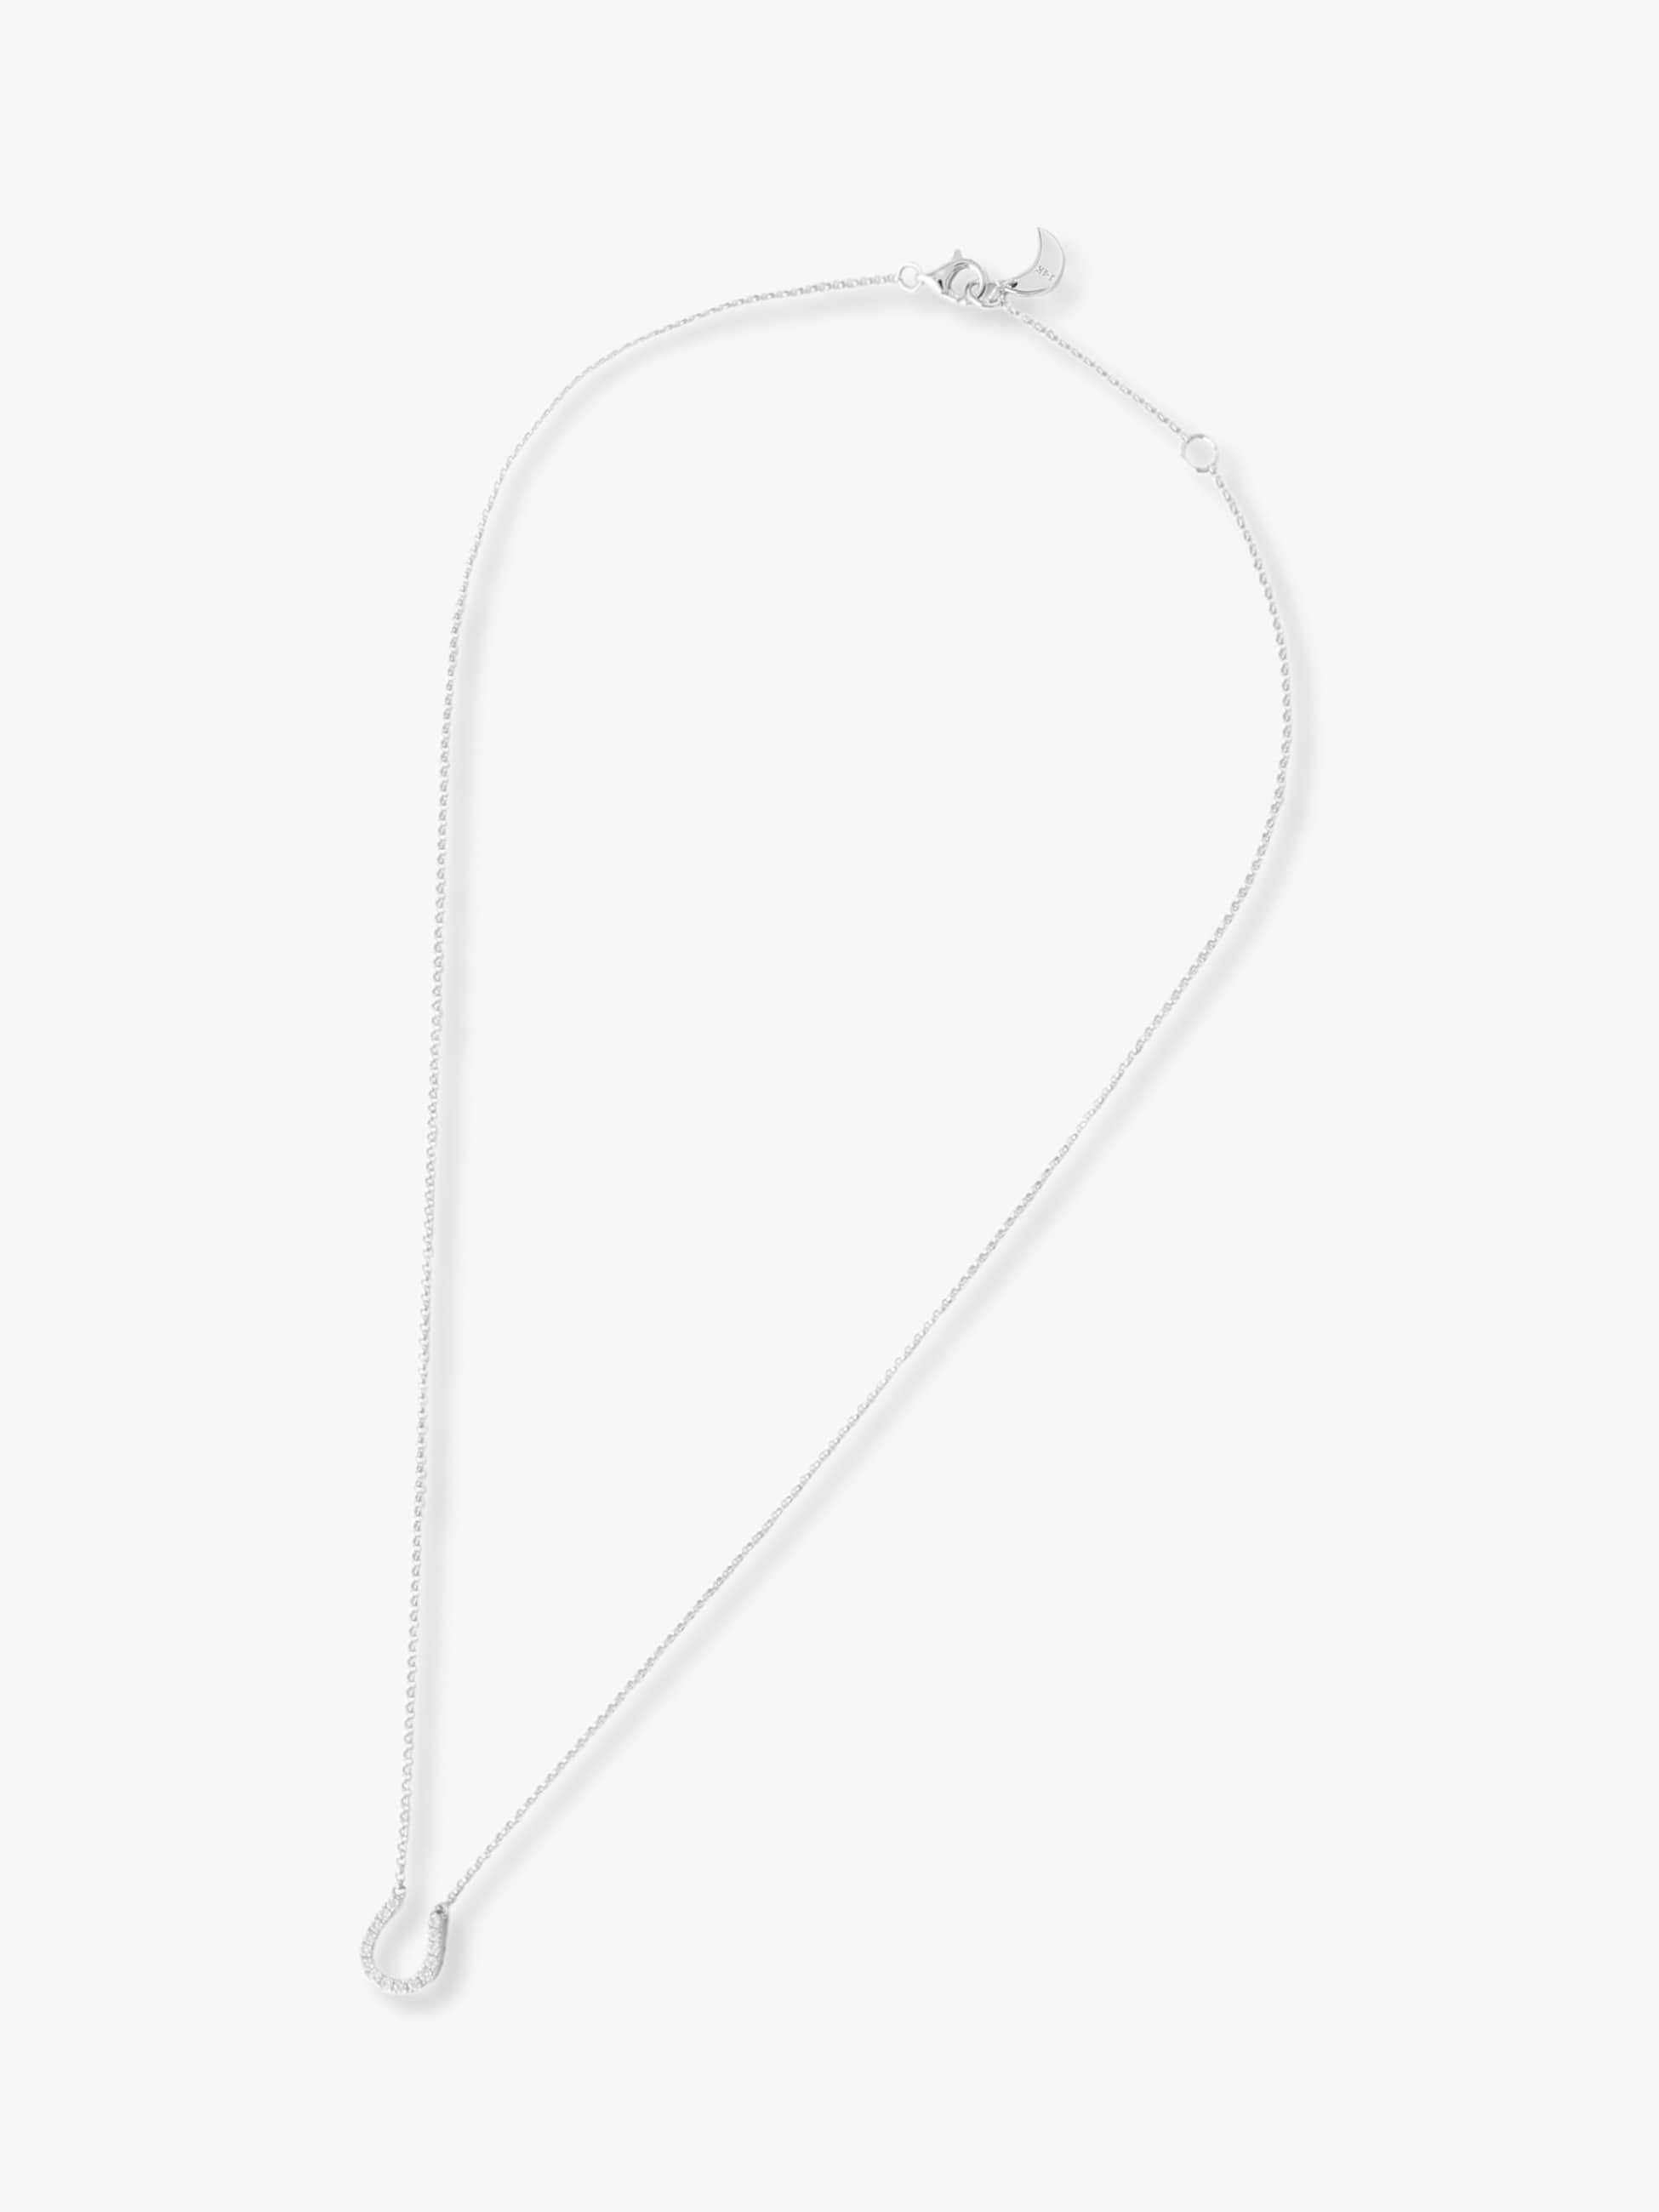 White&Black Diamond Horse Shoe Necklace